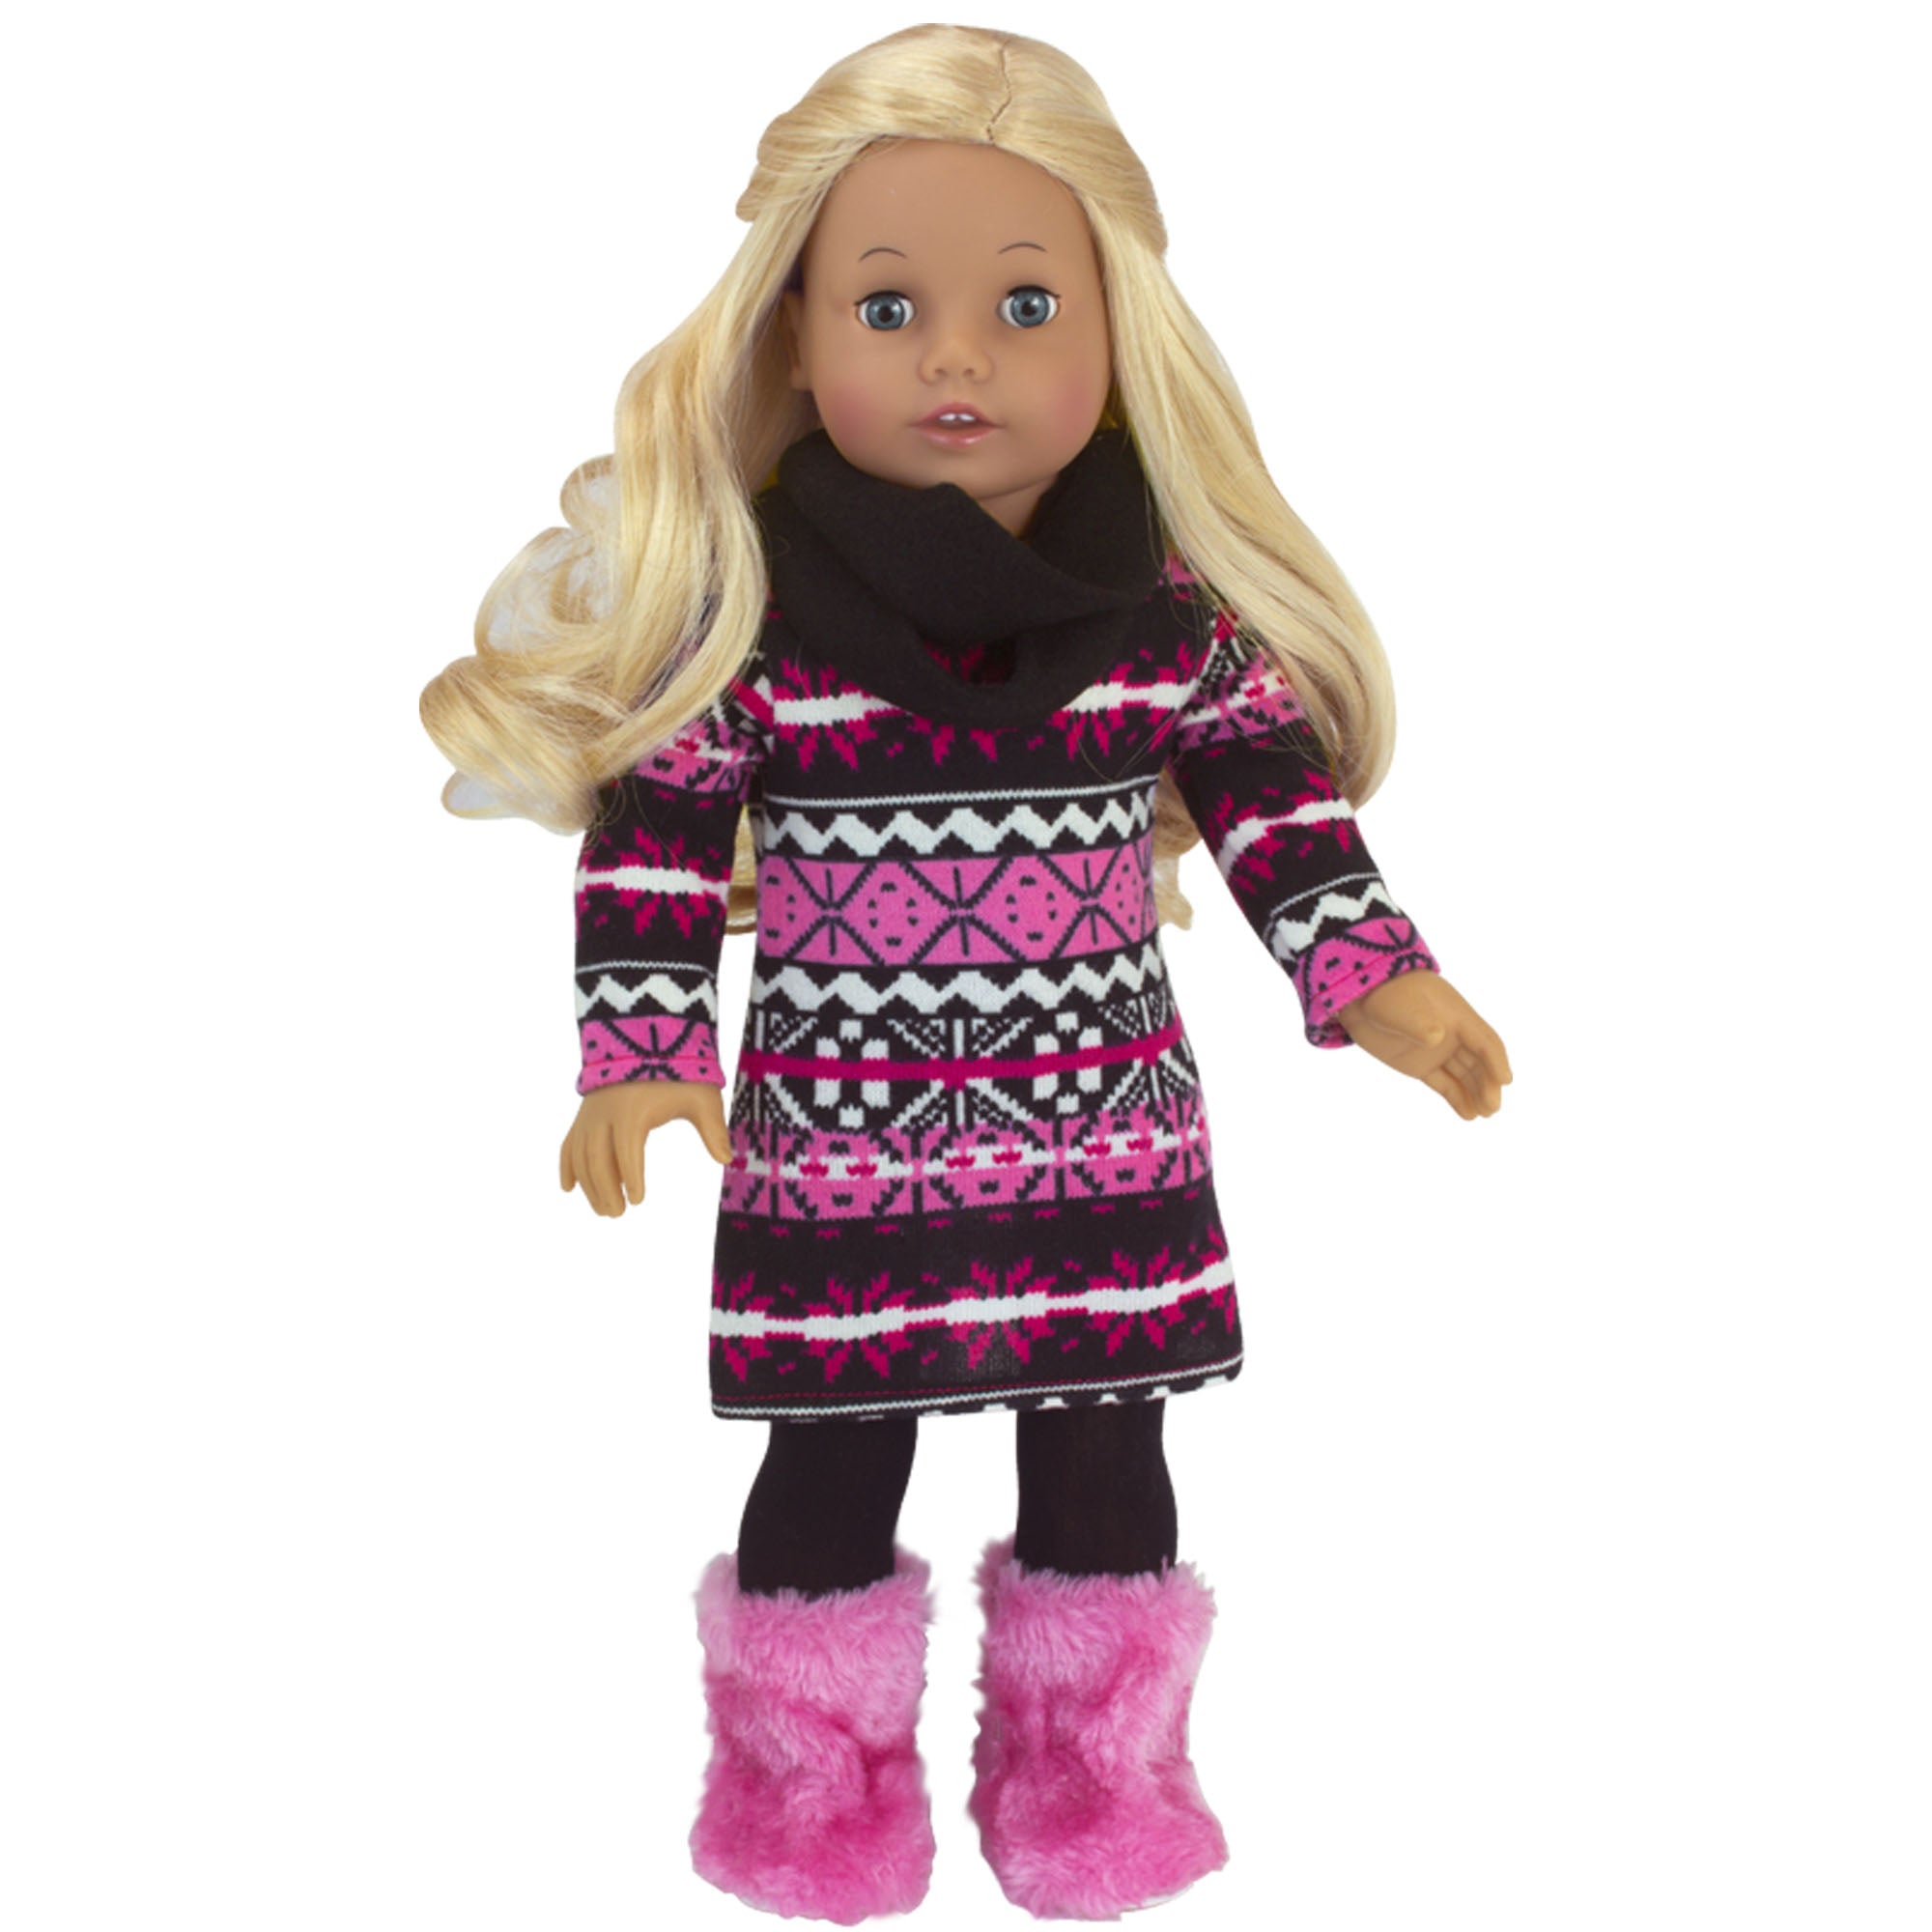 Sophia’s Cute & Stylish Mix & Match Ikat Print Seasonal Winter Knit Dress & Infinity Scarf Outfit Set for 18” Dolls, Hot Pink/Black